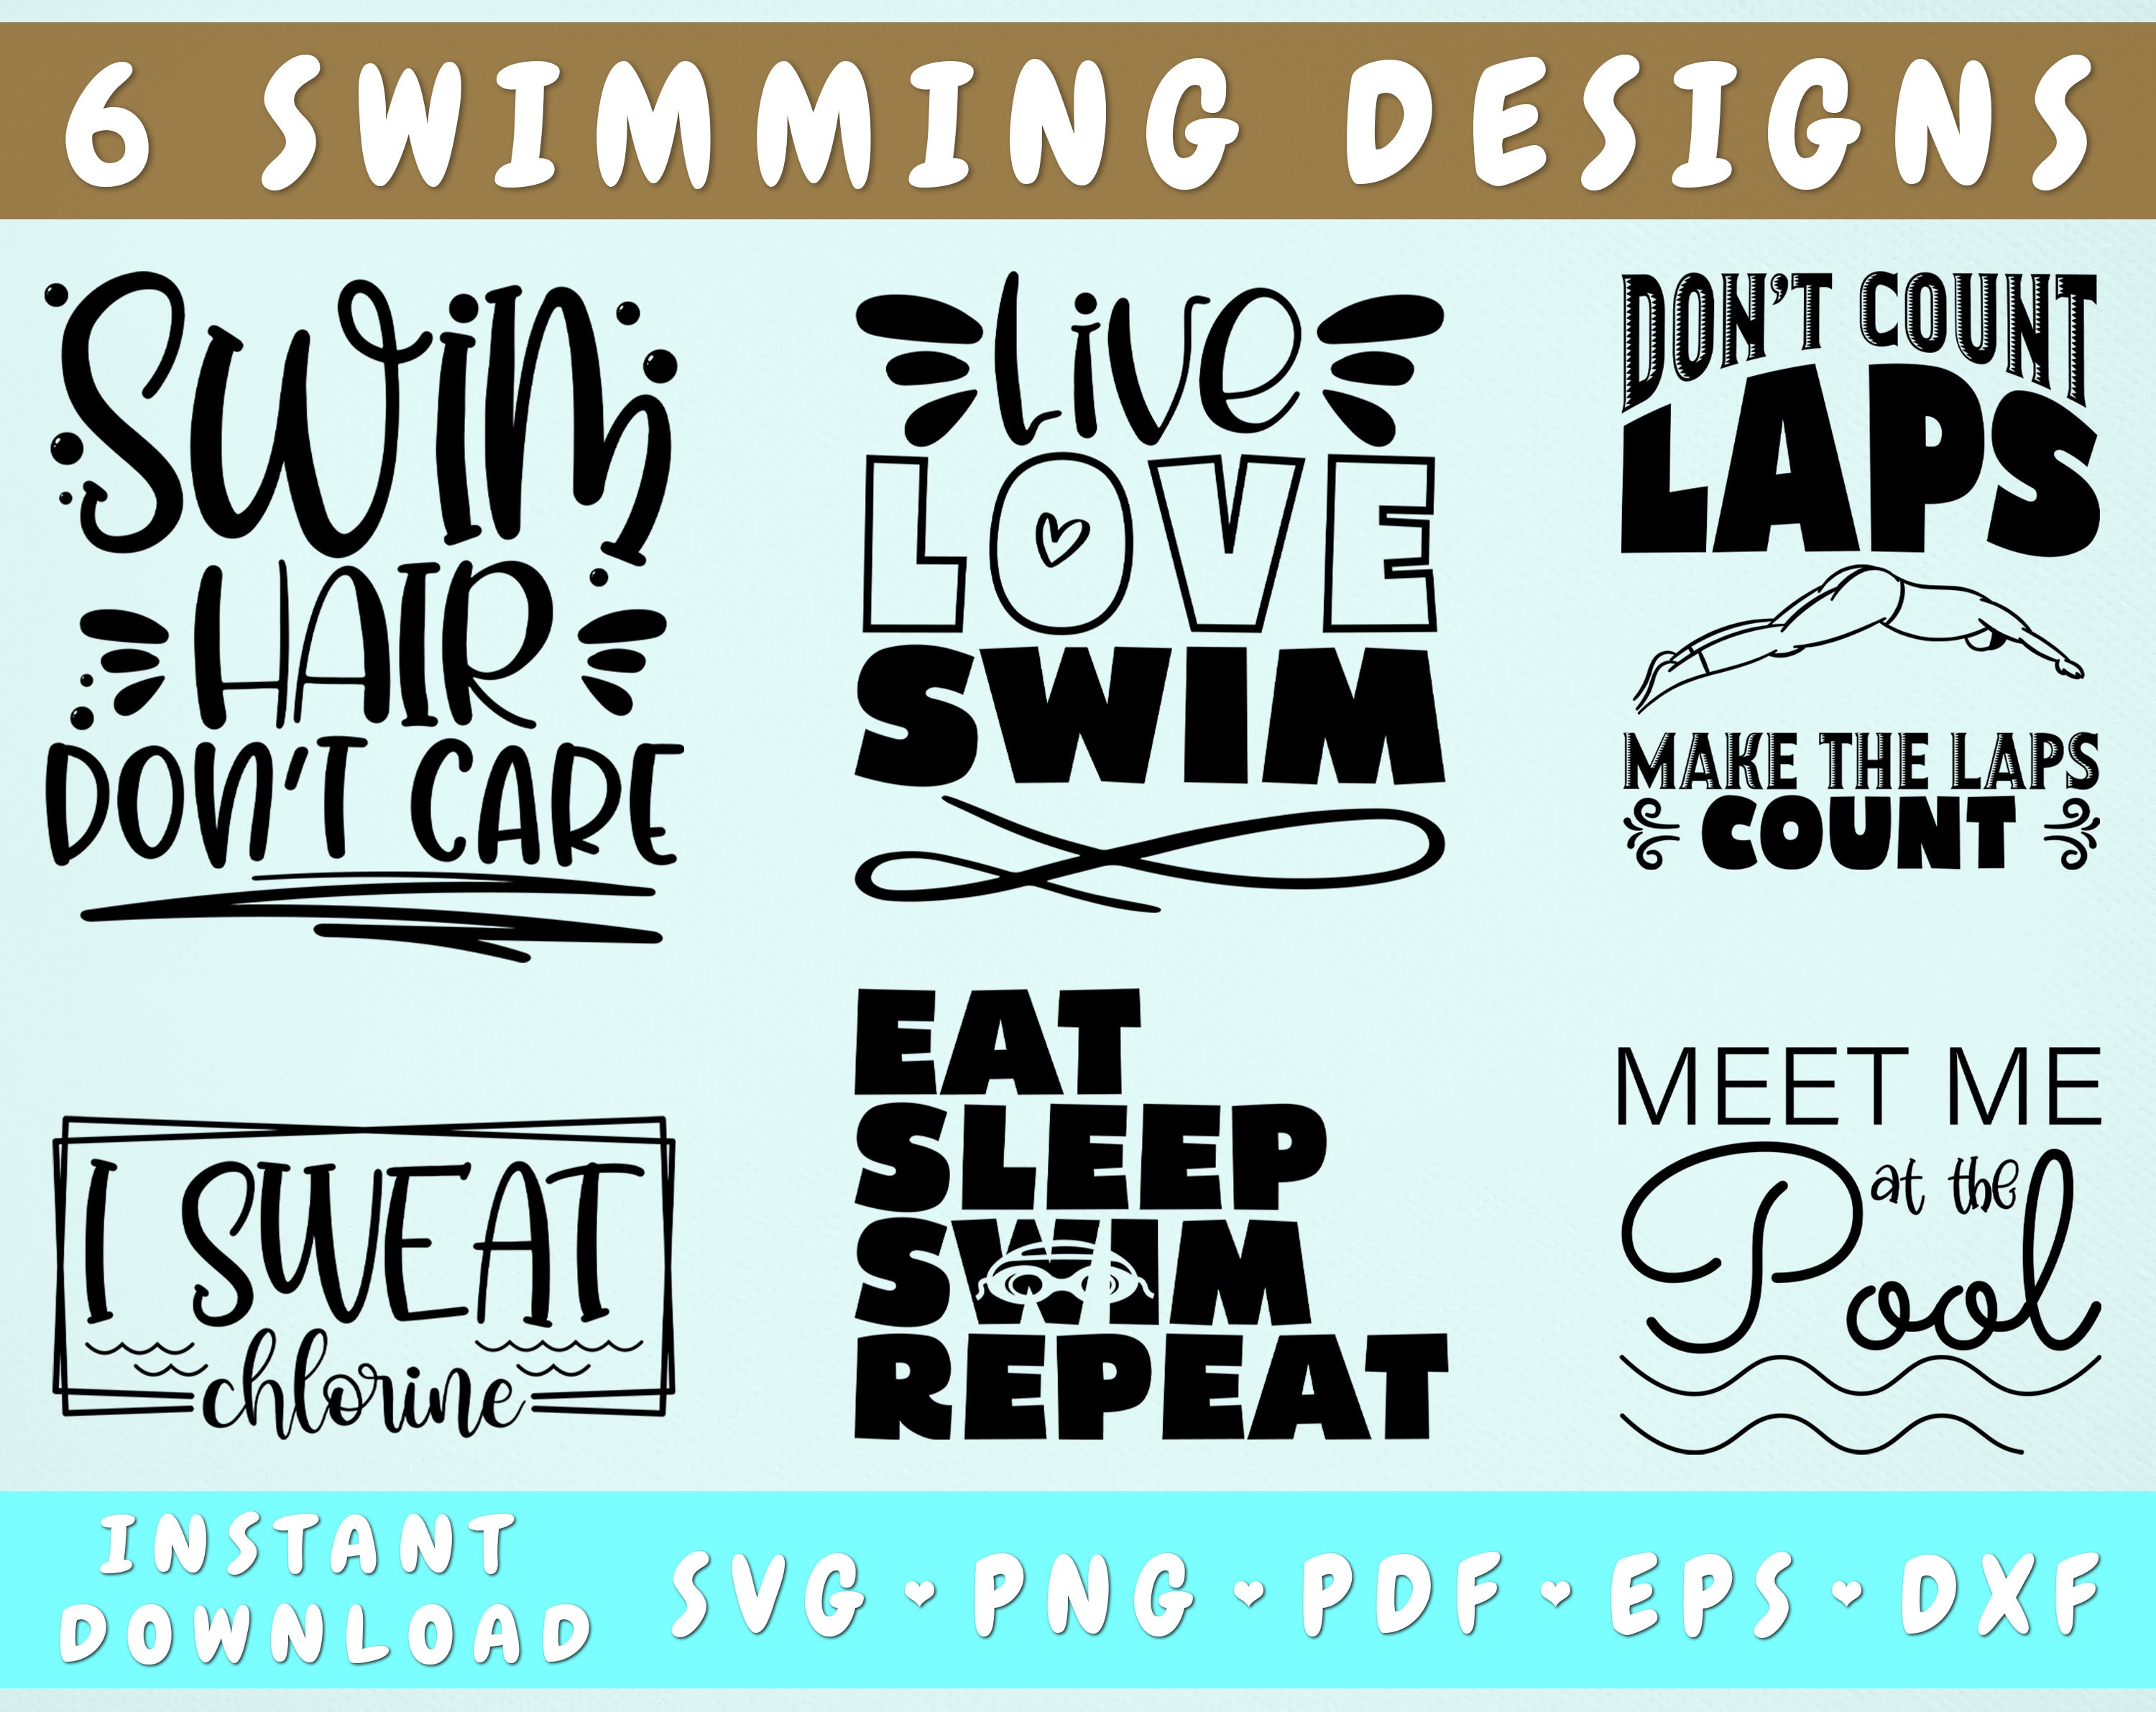 Swimming Quotes SVG Bundle, 6 Designs, Swimming Sayings SVG, Swimmer Shirt SVG, Live Love Swim SVG, I Sweat Chlorine SVG, Meet Me At The Pool SVG